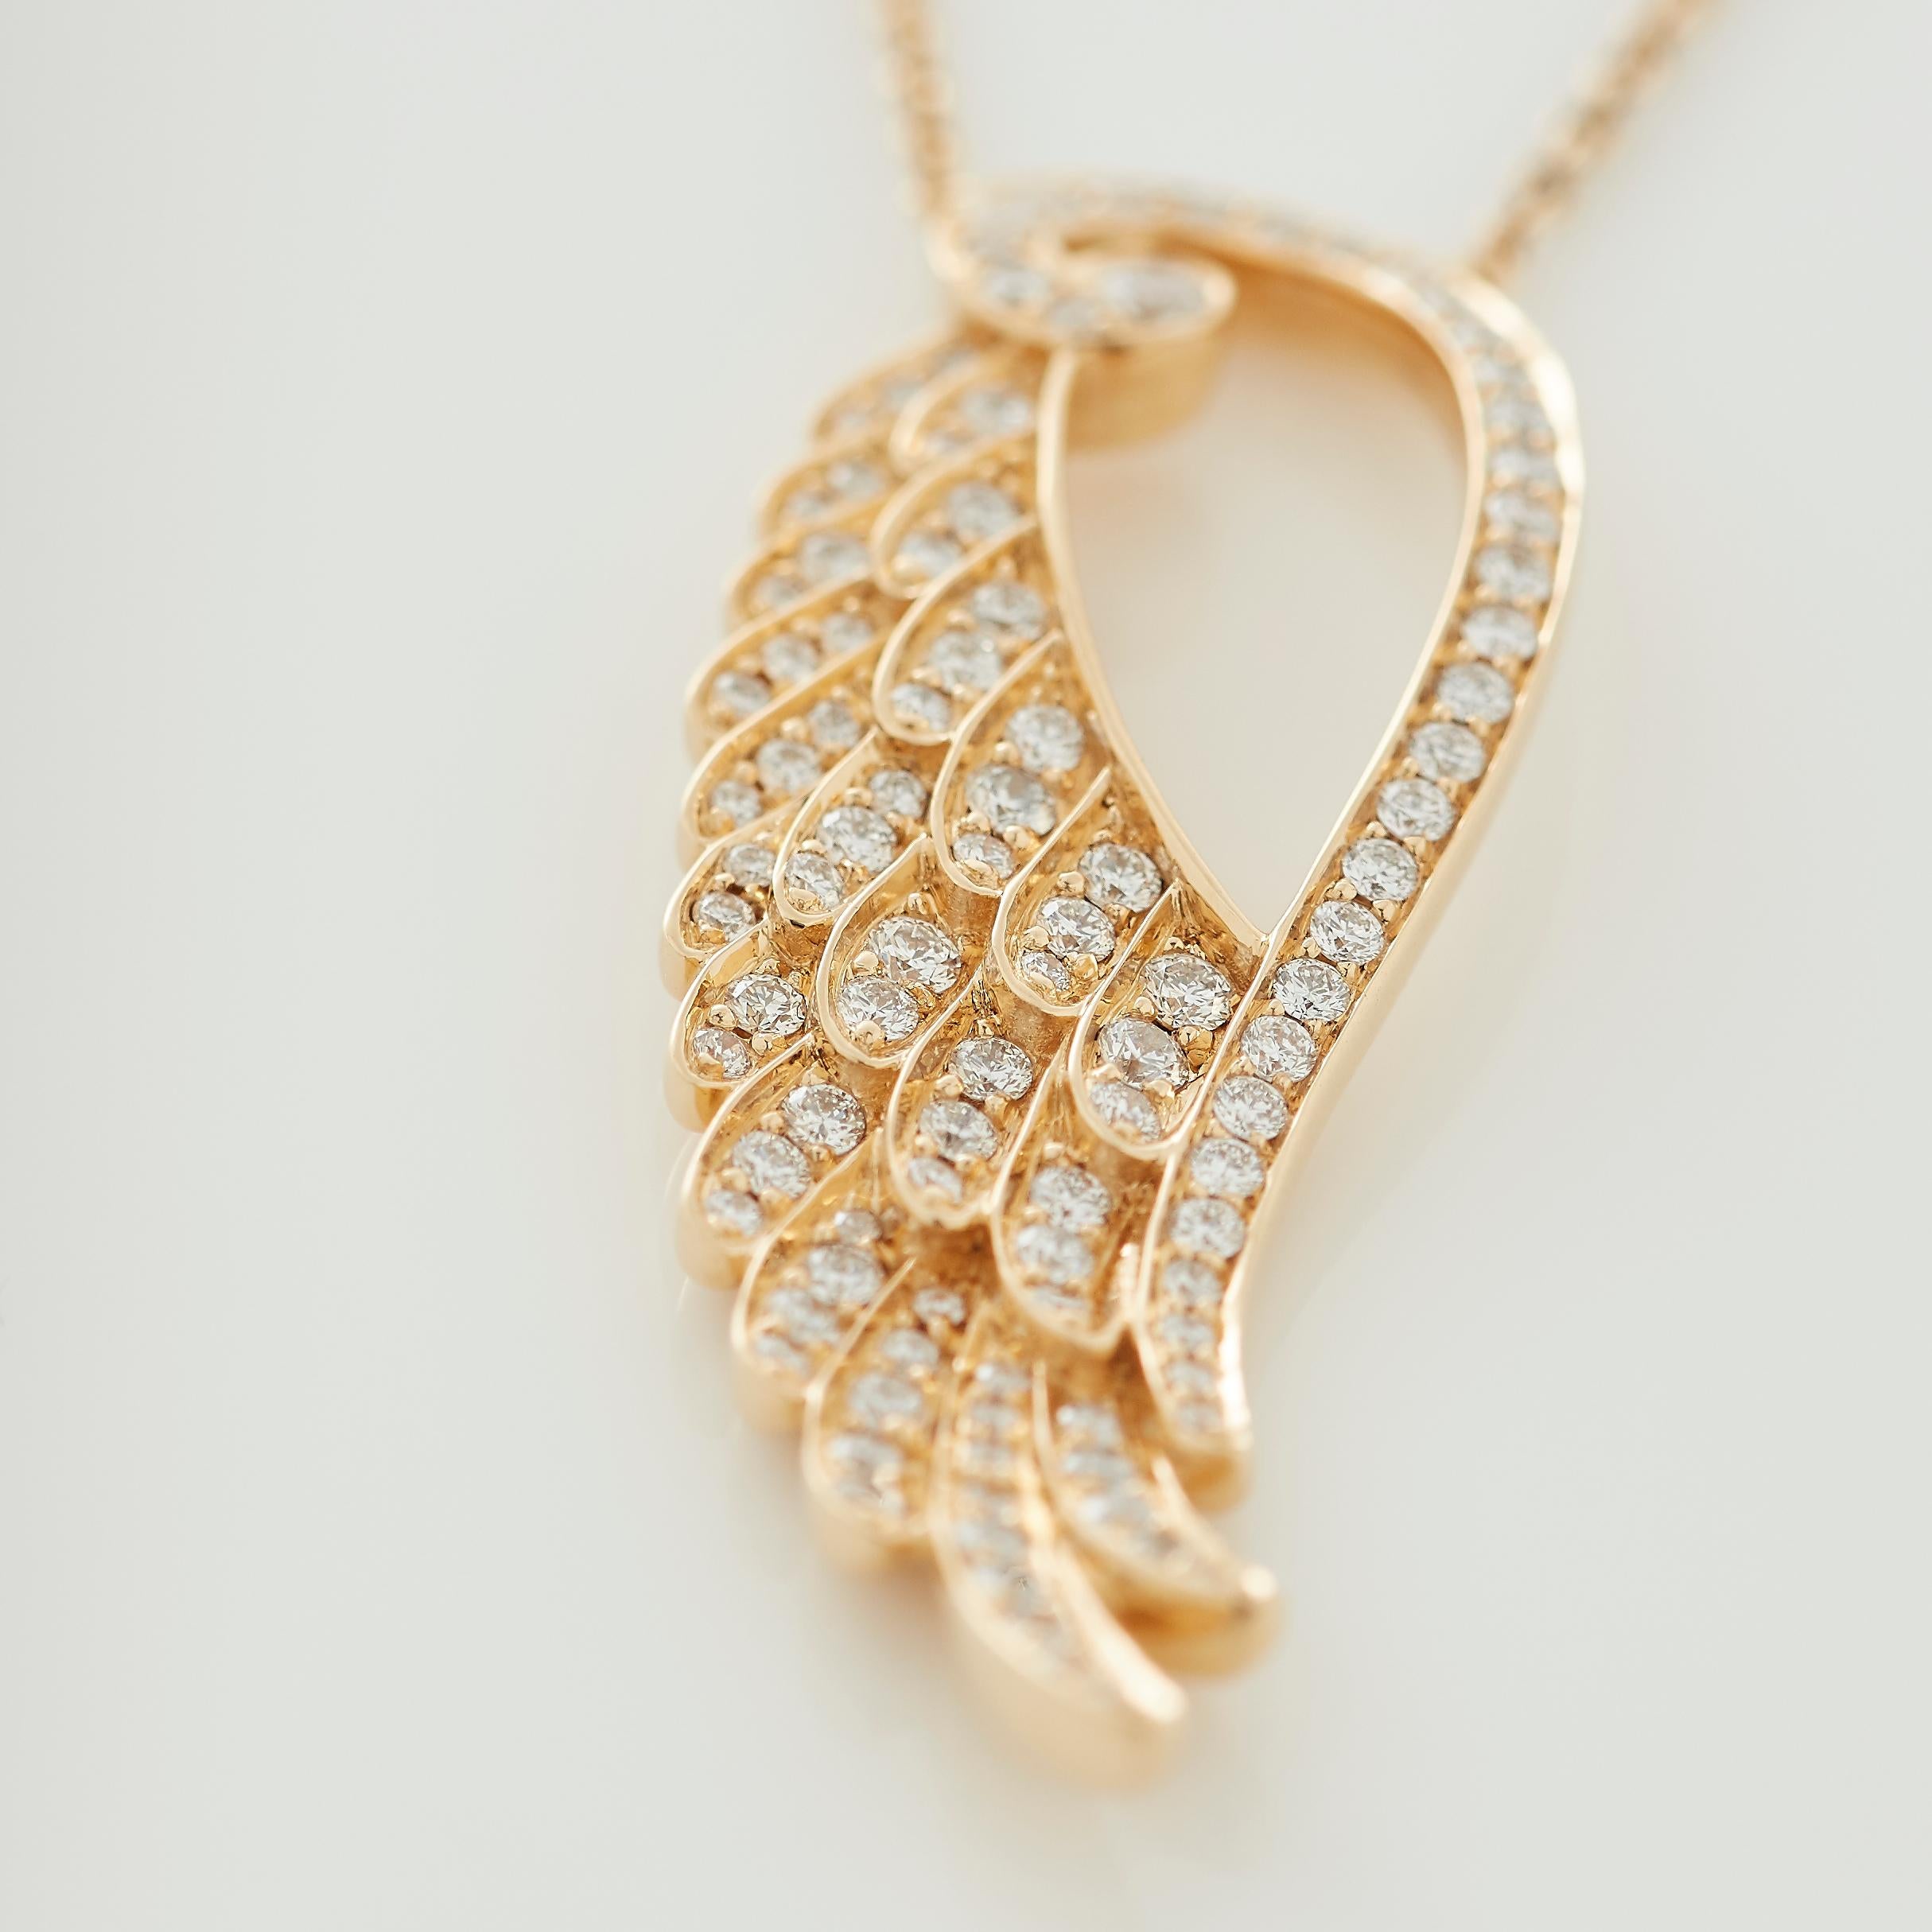 Garrard 'Wings Embrace' 18 Karat Yellow Gold and White Diamond Pendant For Sale 2